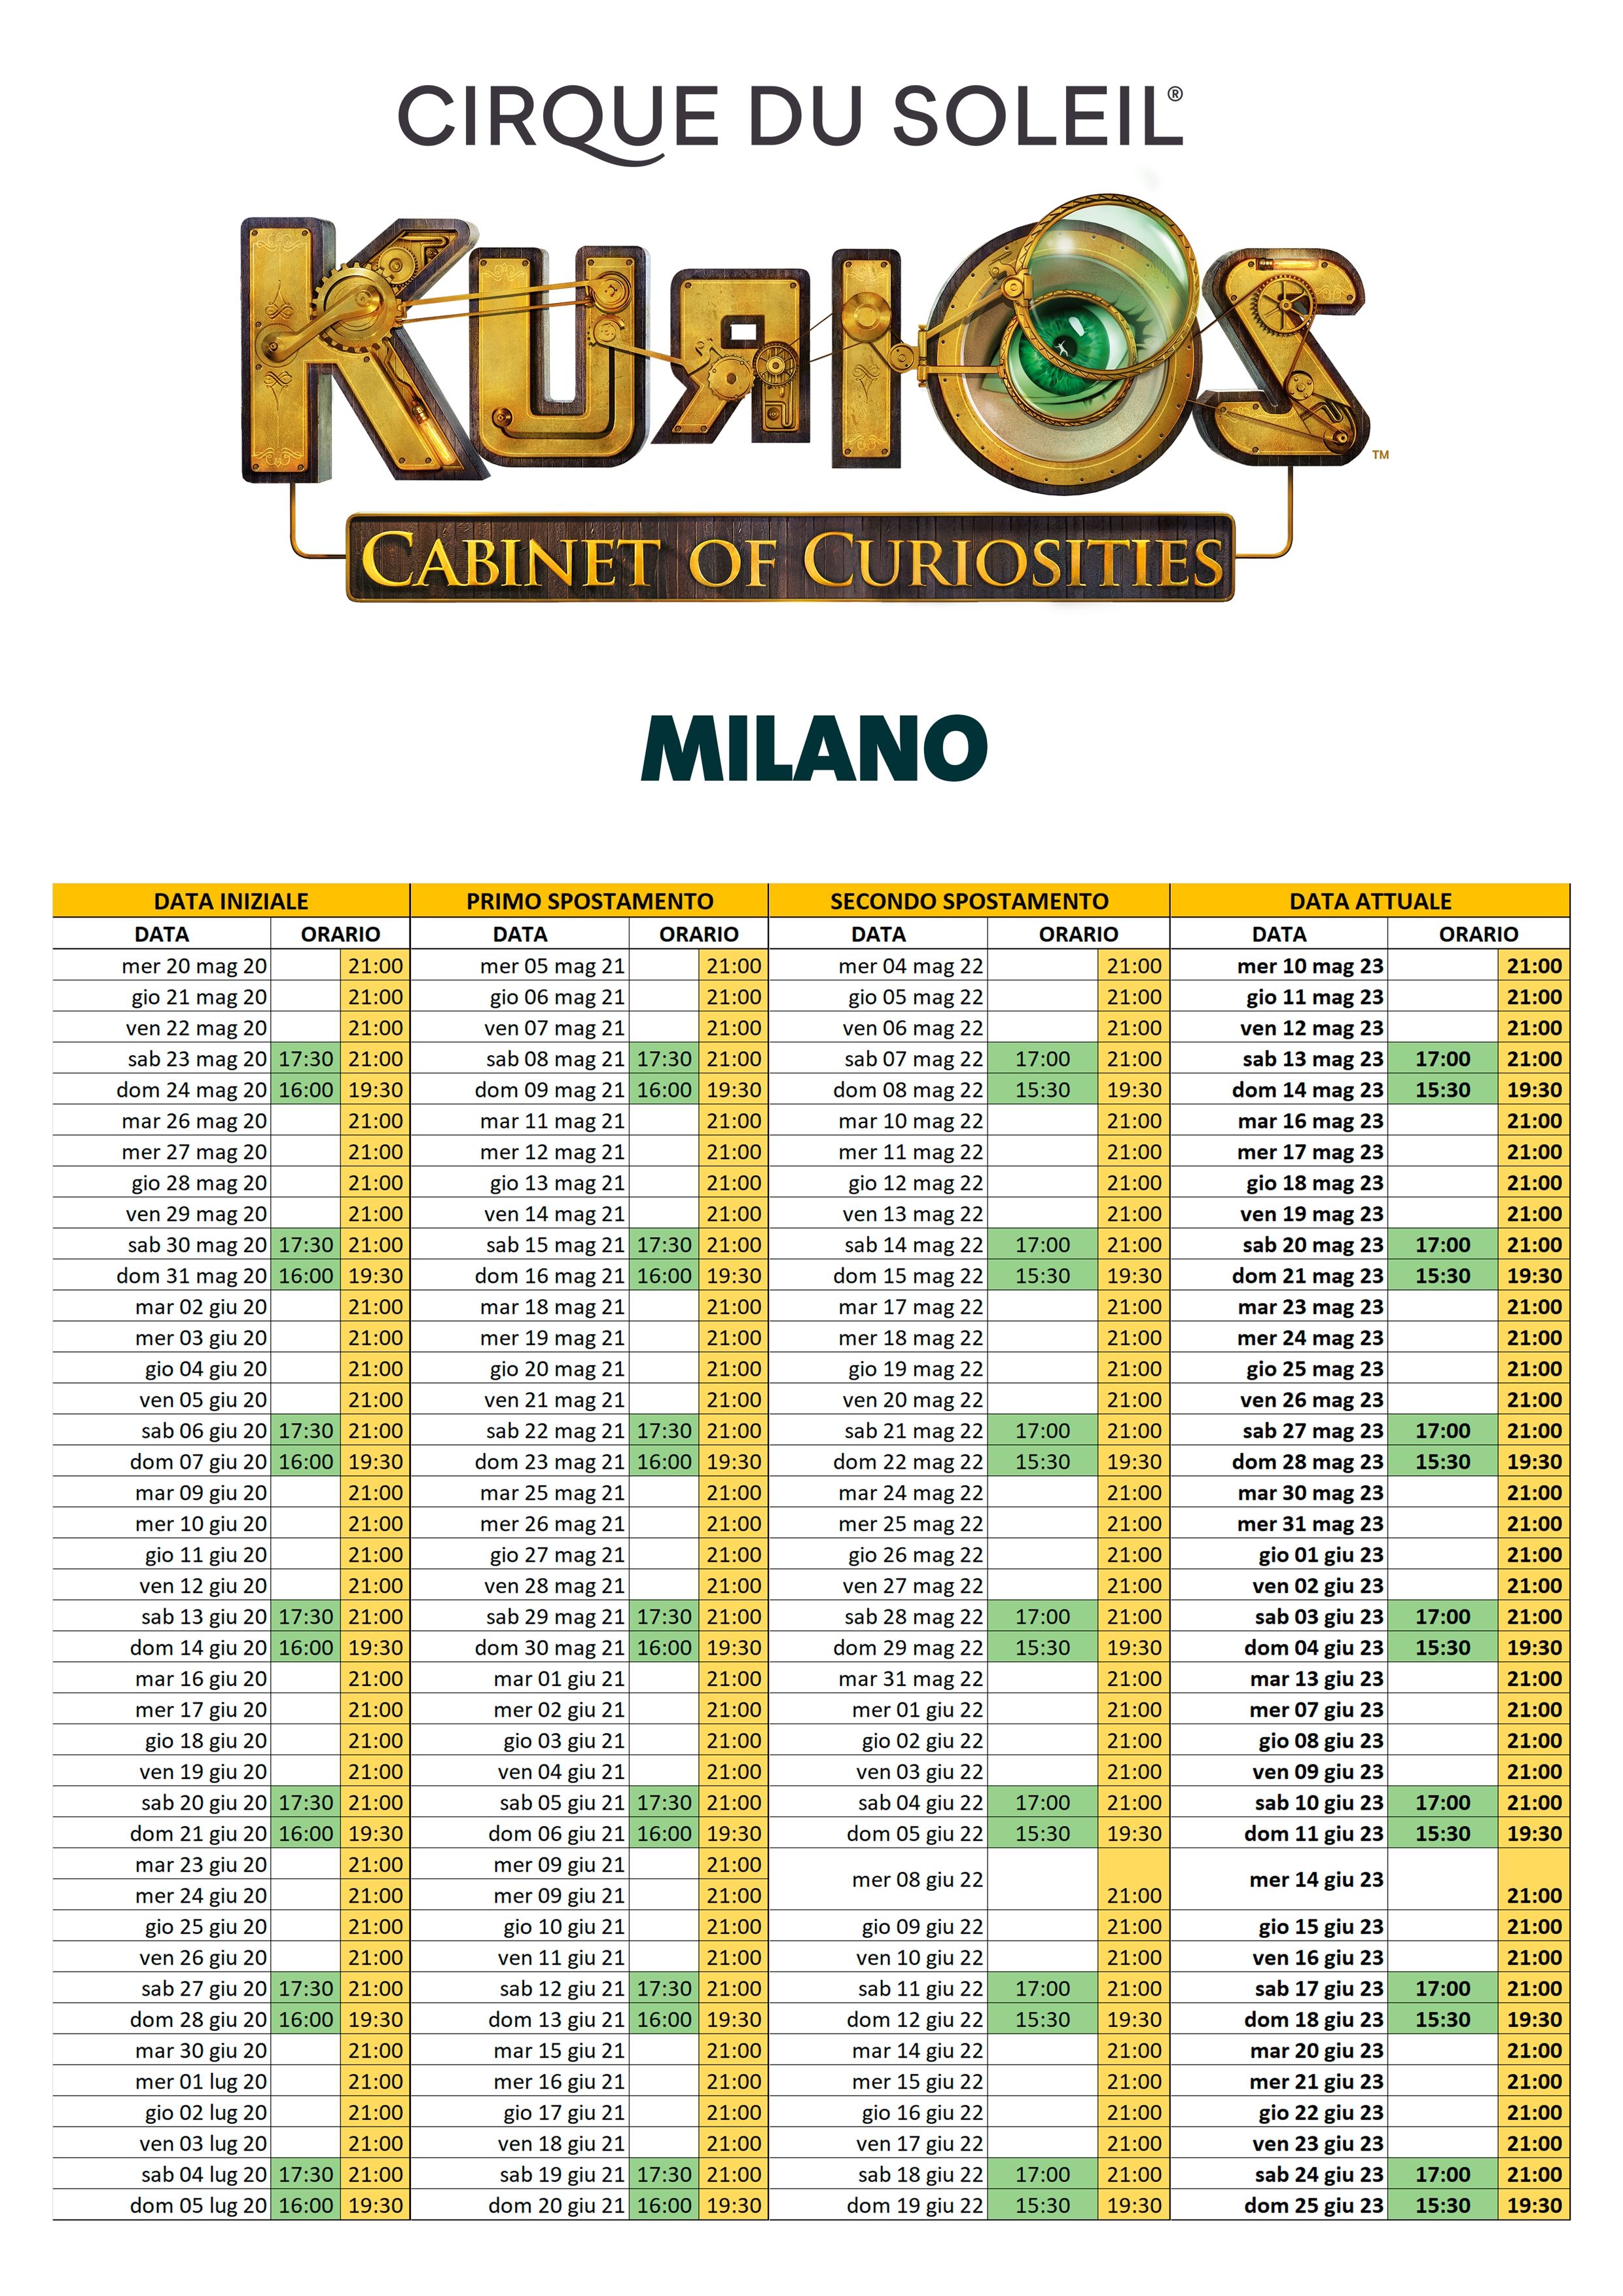 KURIOS_23_tabelle date spostamenti_MILANO.jpg